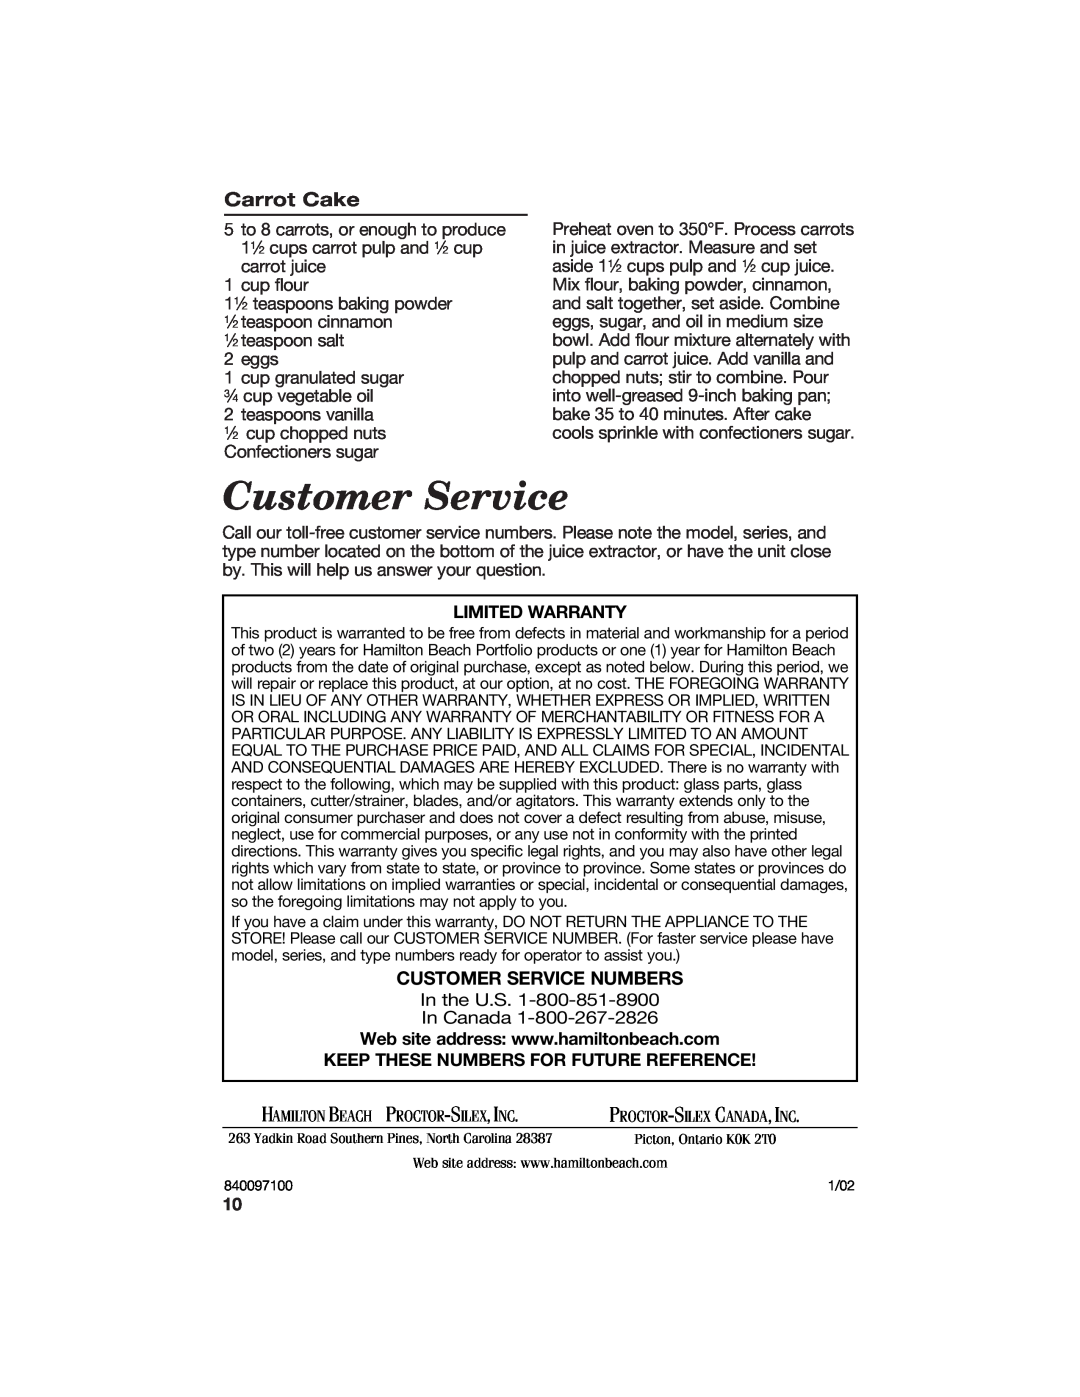 Hamilton Beach 840097100 manual Carrot Cake, Customer Service Numbers 